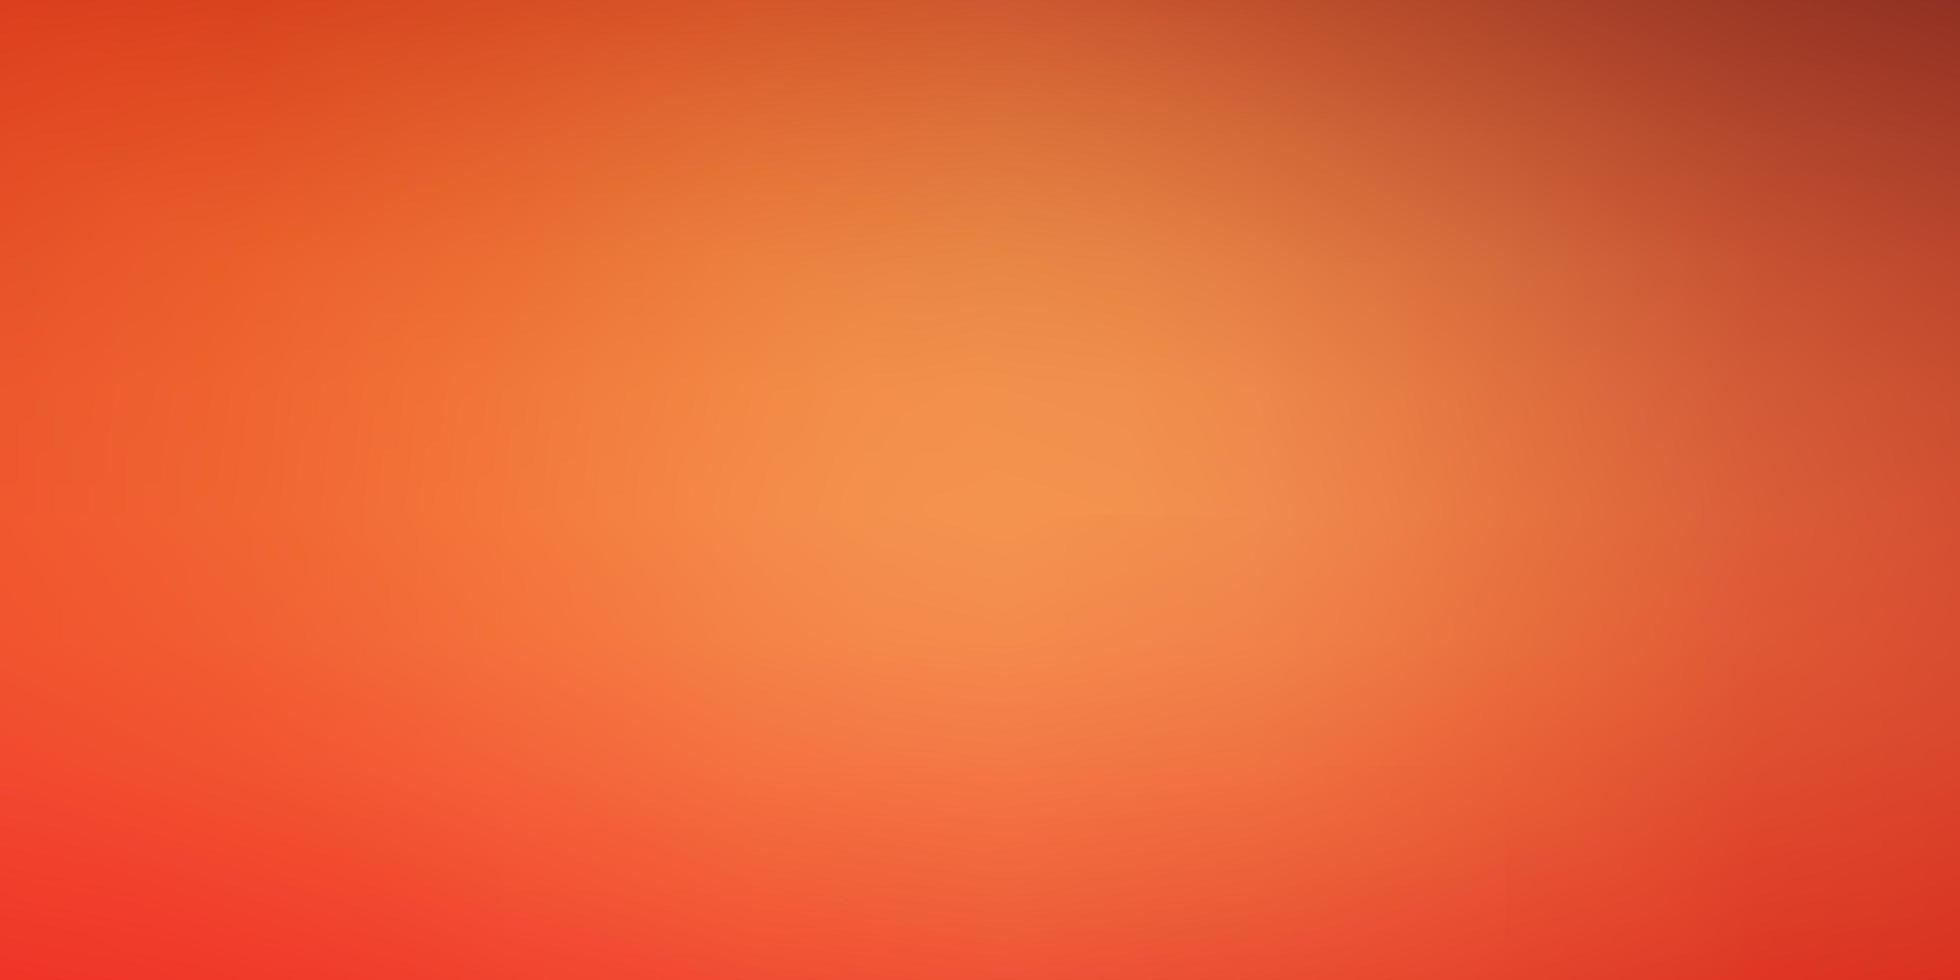 layout borrado moderno do vetor laranja claro.